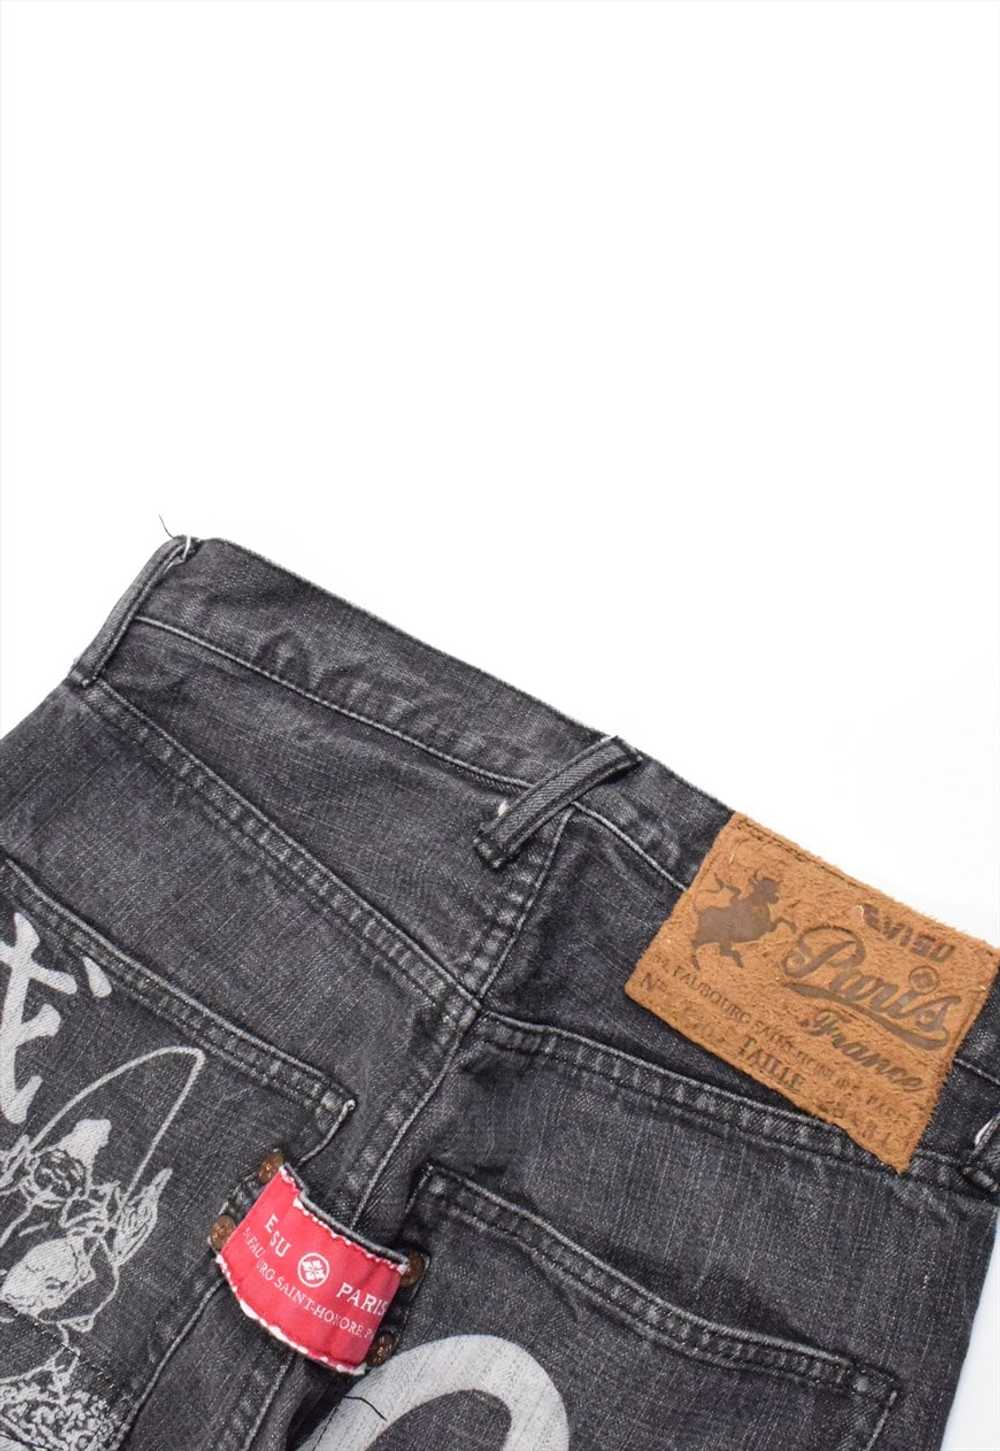 Vintage Evisu Yamane Selvedge Denim Jeans in Grey - image 4